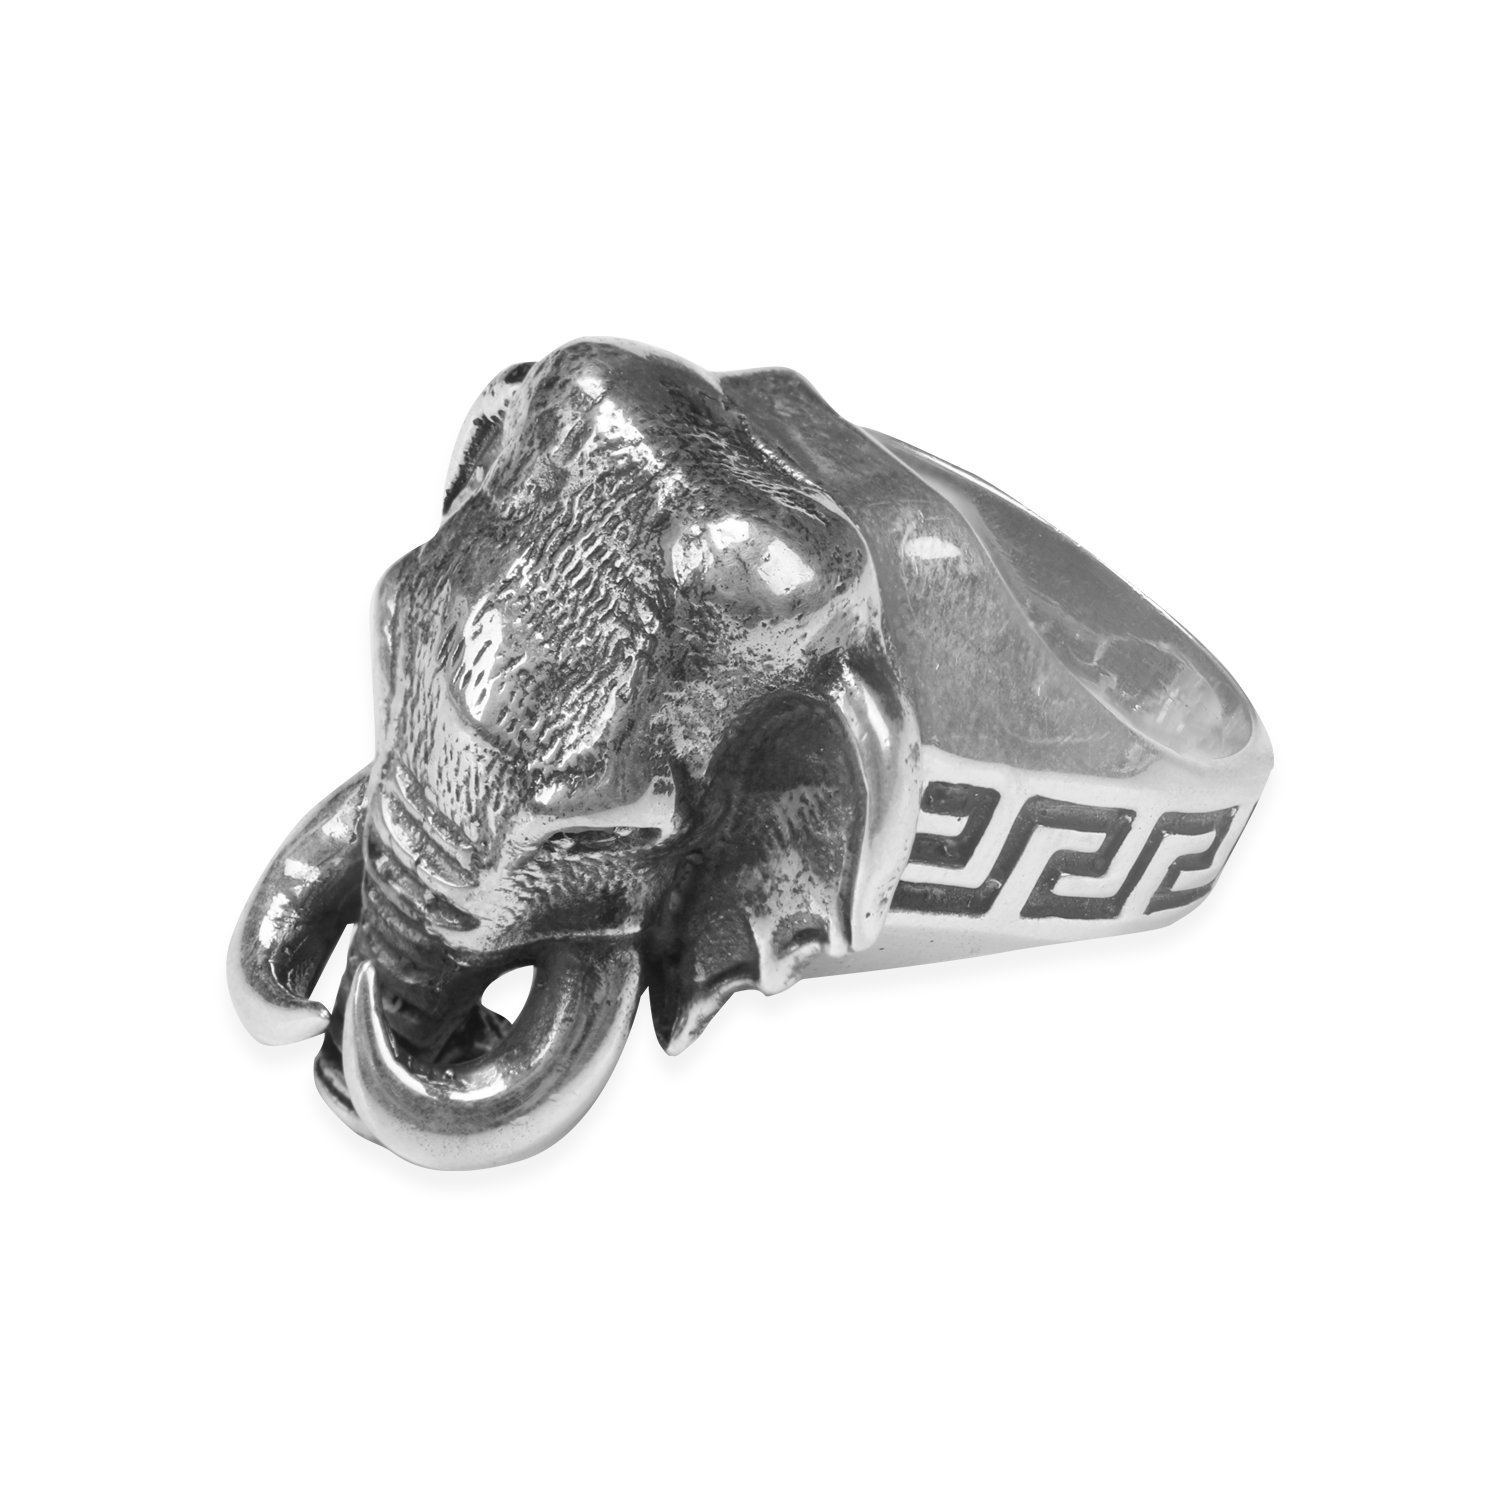 Majestic Elephant: Oxidized Sterling Silver Ring | SKU: 0018200102